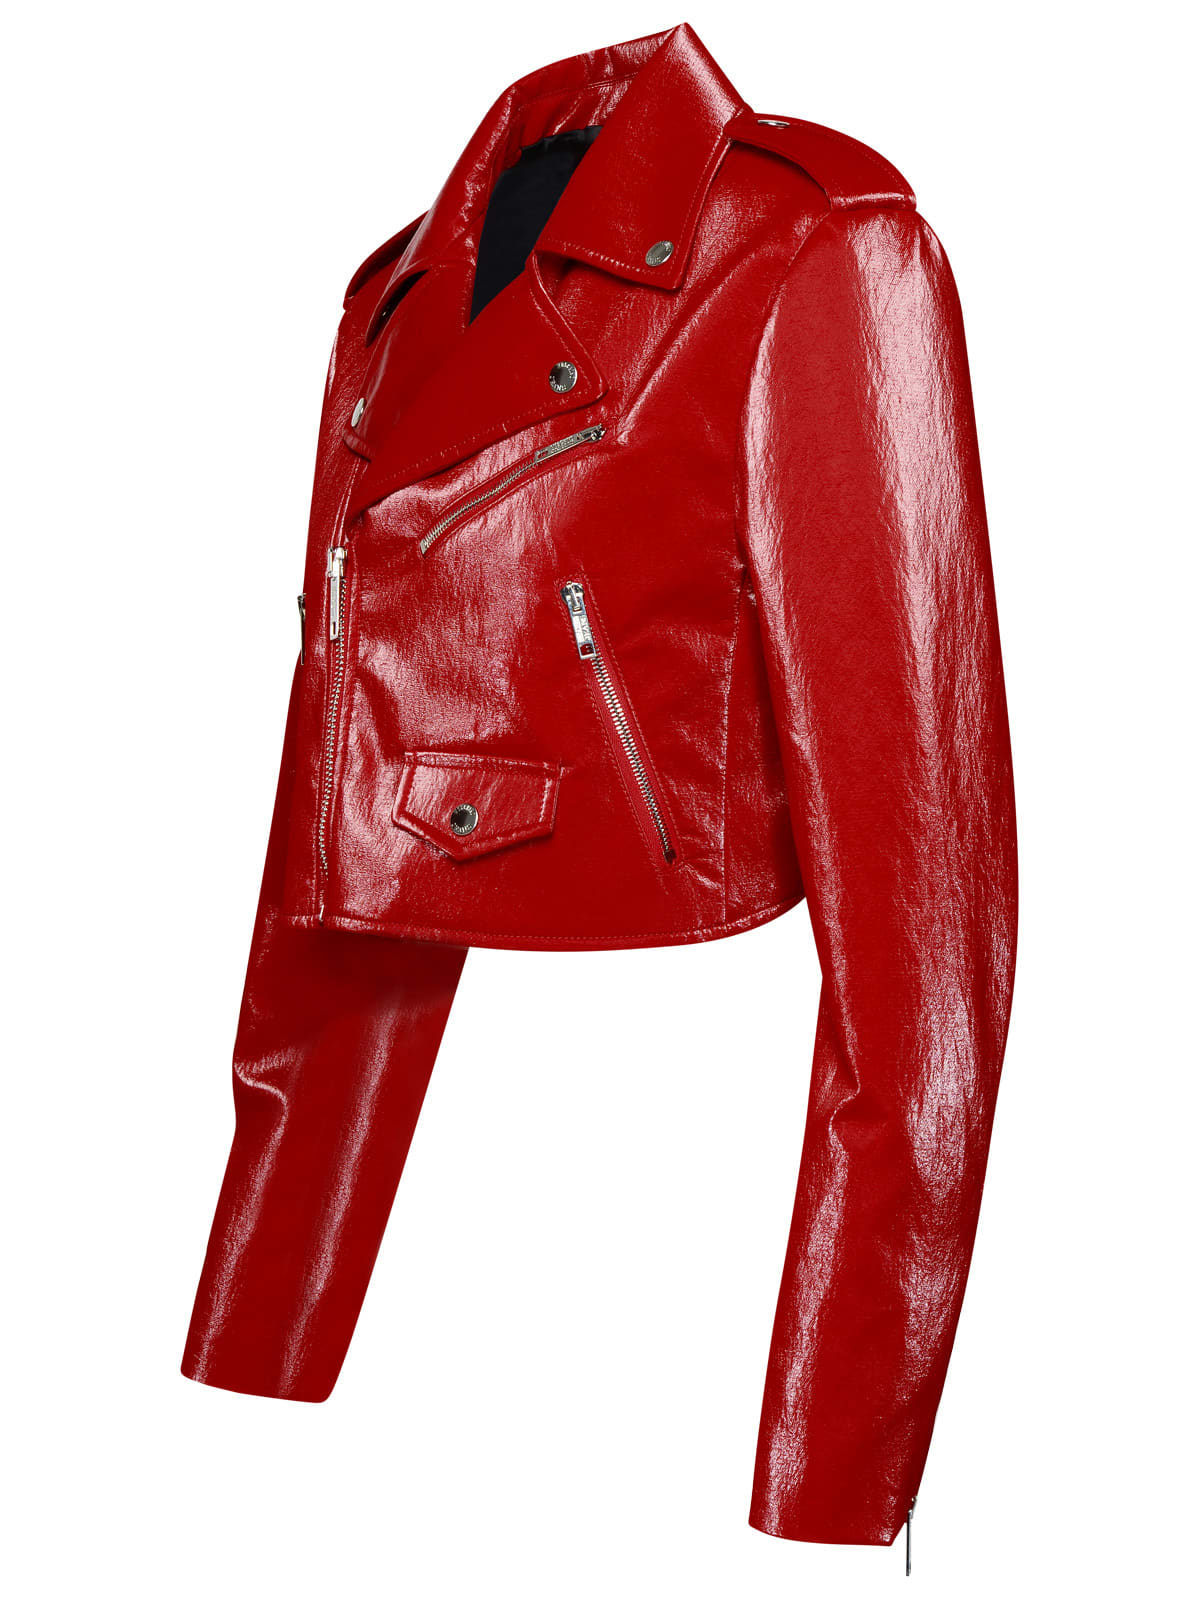 Shop M05ch1n0 Jeans Red Cotton Blend Biker Jacket